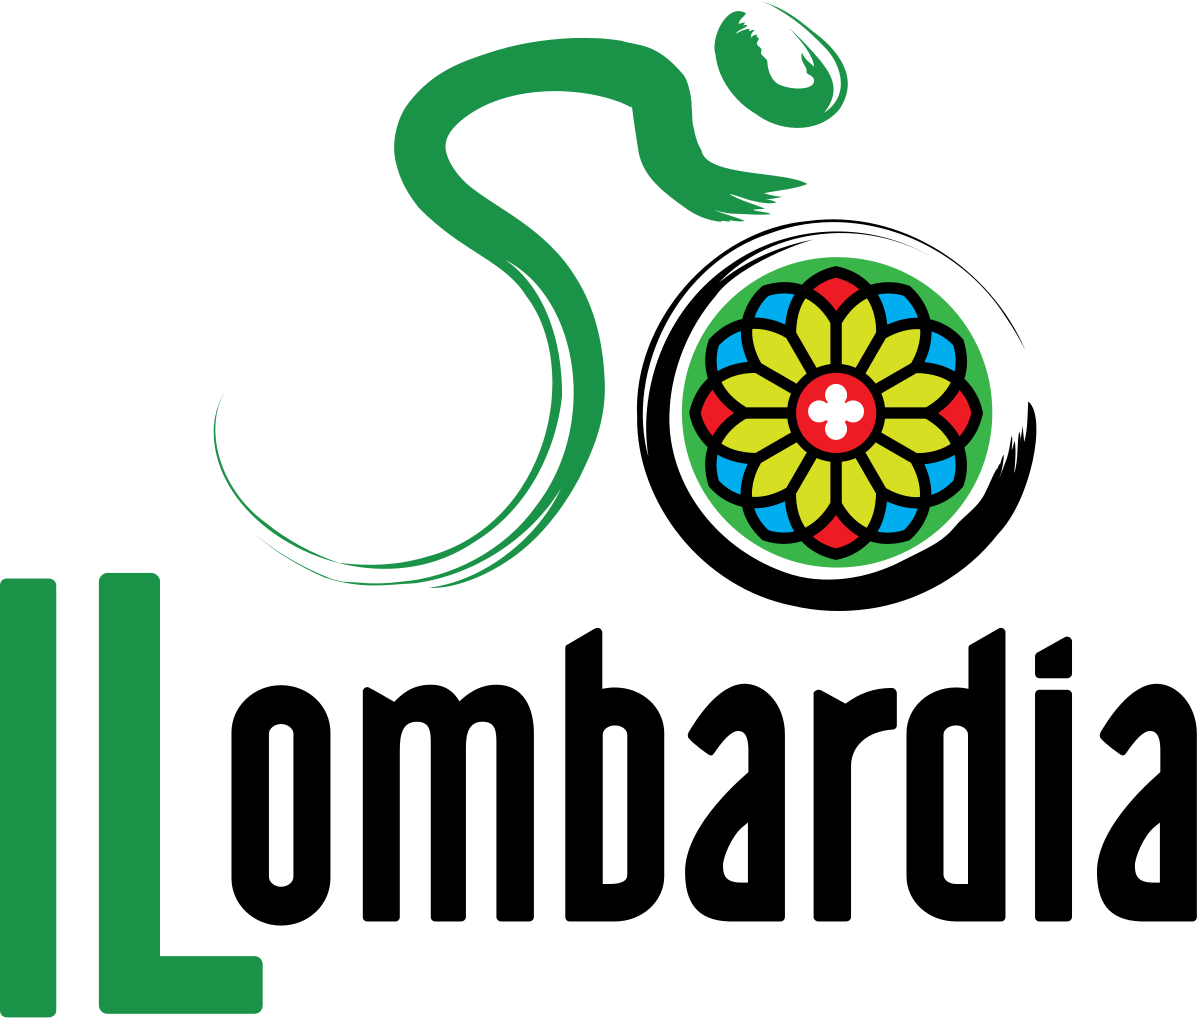 Giro di Lombardia logo.svg